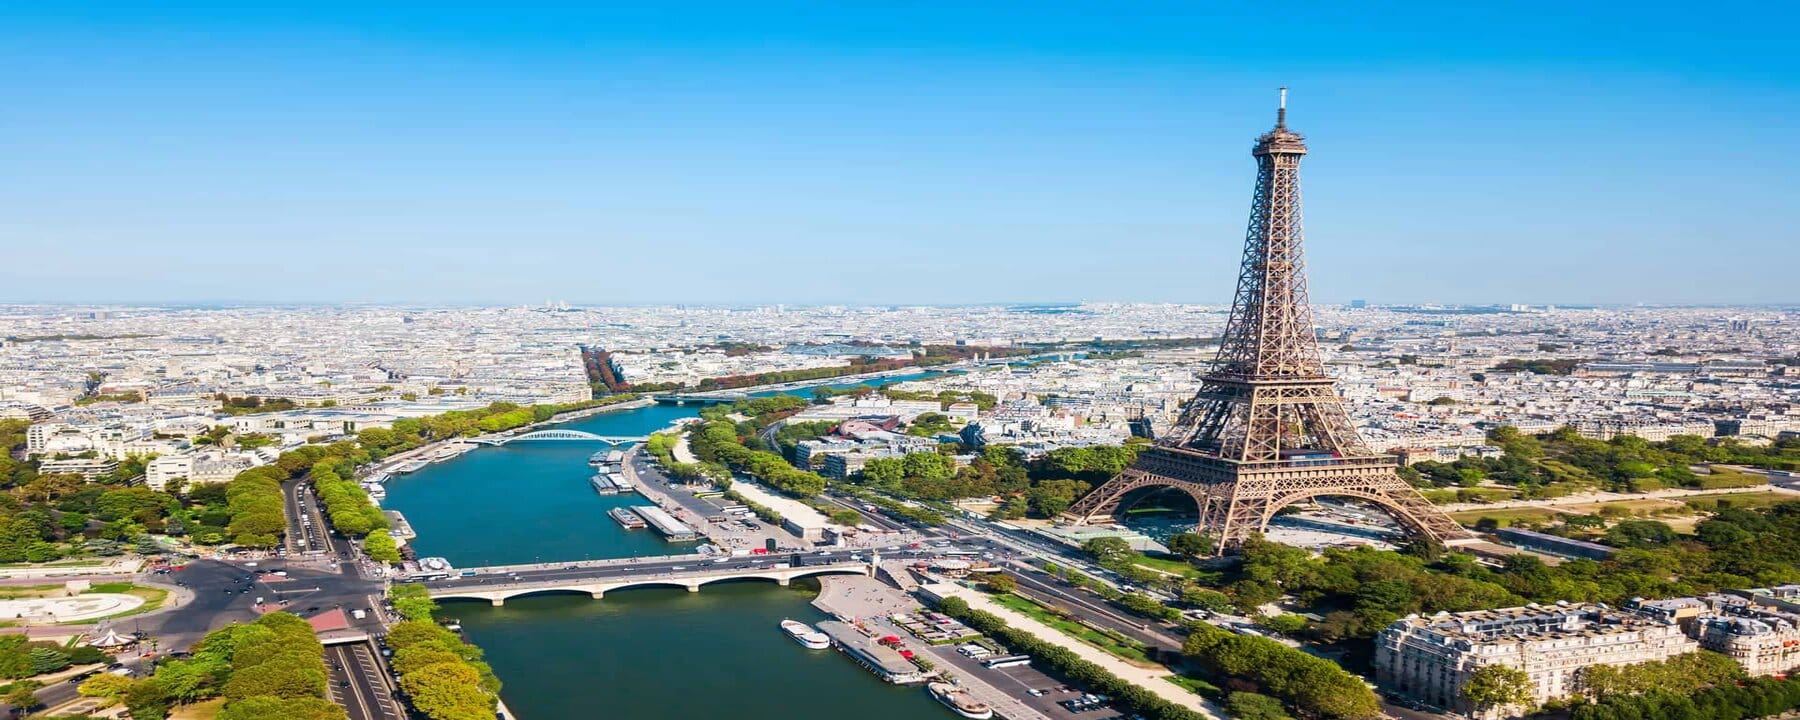 Decouvrir-la-tour-eiffel a Parigi e noleggiare una macchina a Parigi e visitare Parigi dormendo in hotel economico a Parigi